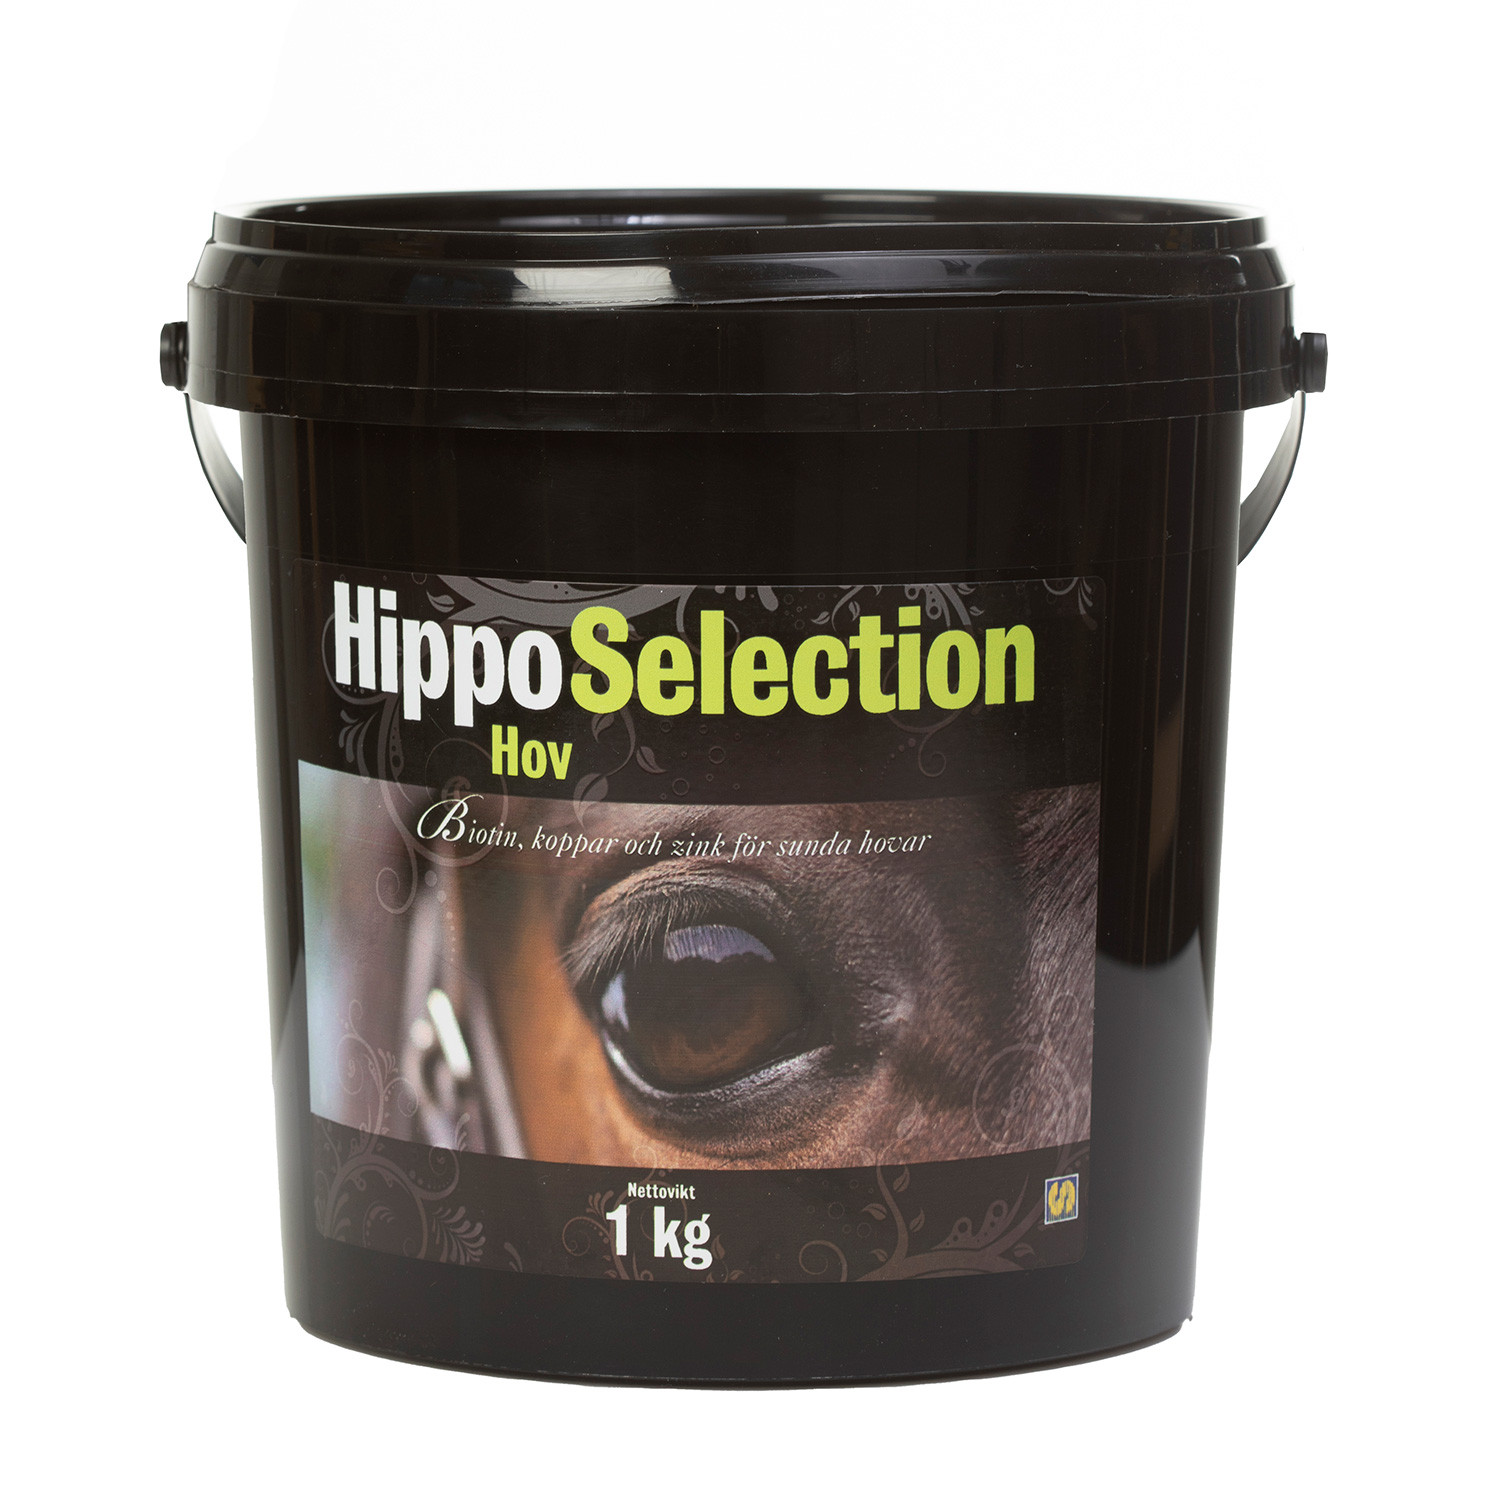 HIPPO SELECTION HOV 1KG